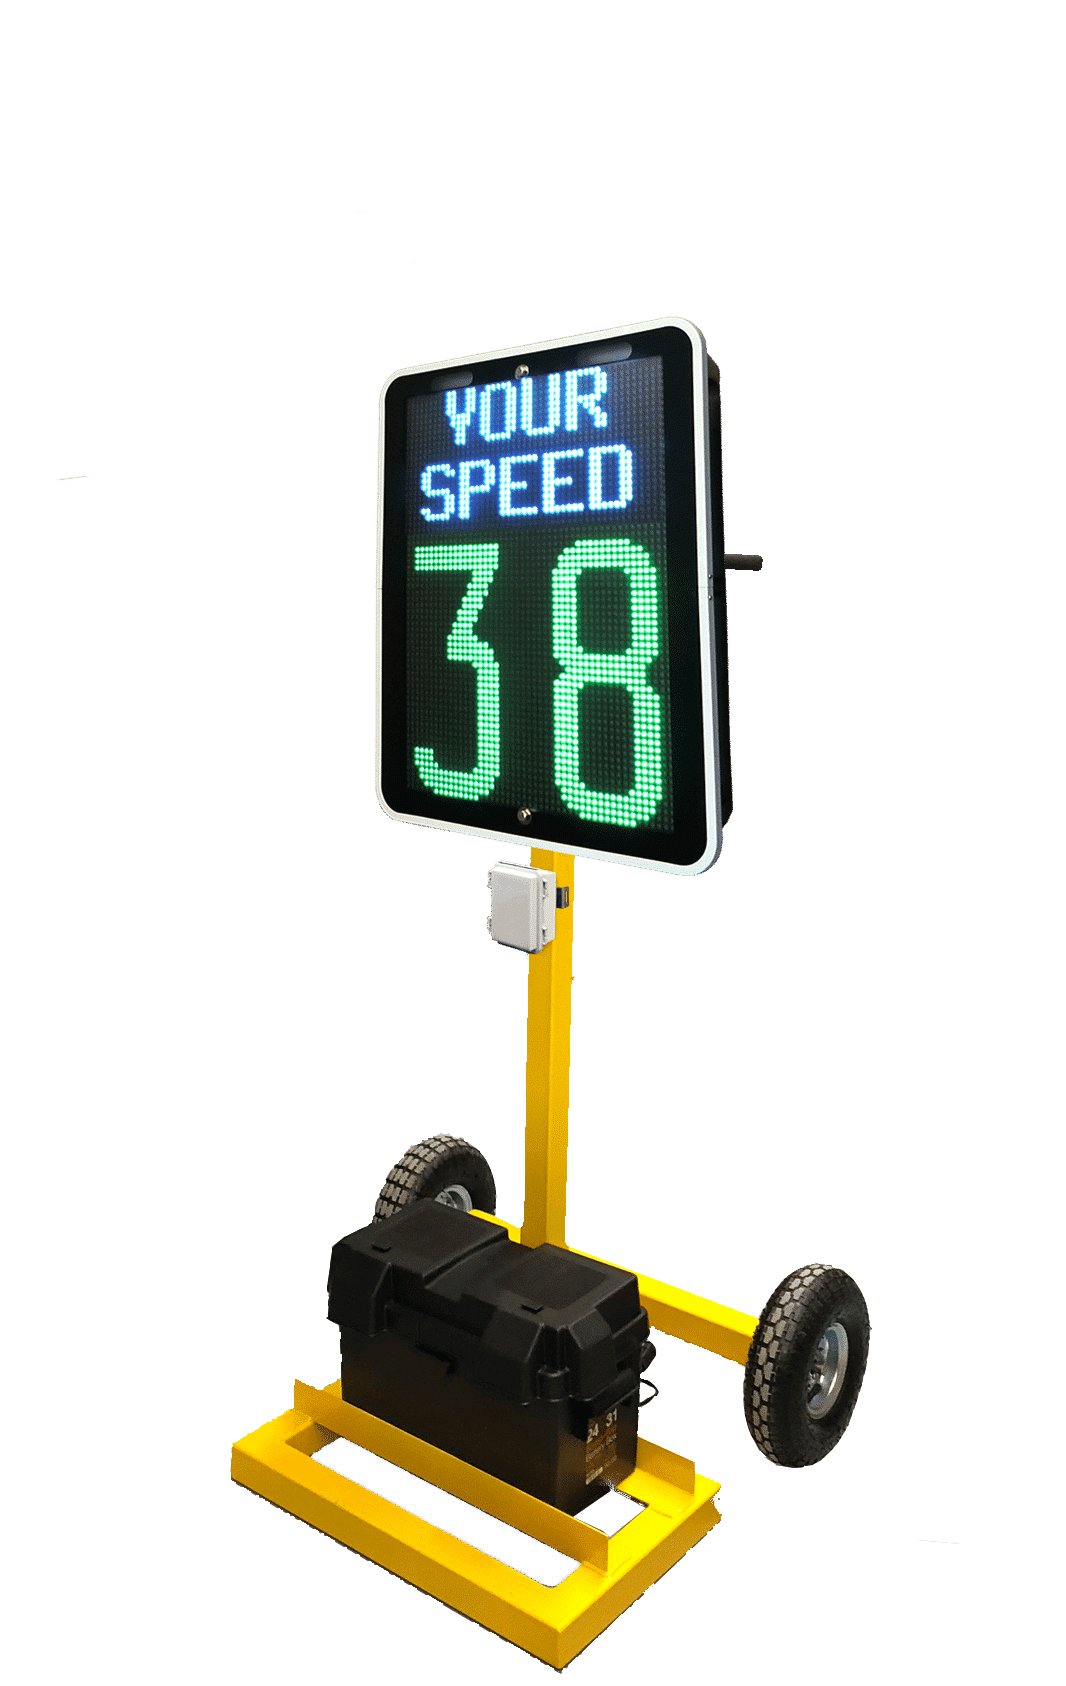 Portable speed display sign KAM-DOLLY - Radar speed display sign - Traffic innovation